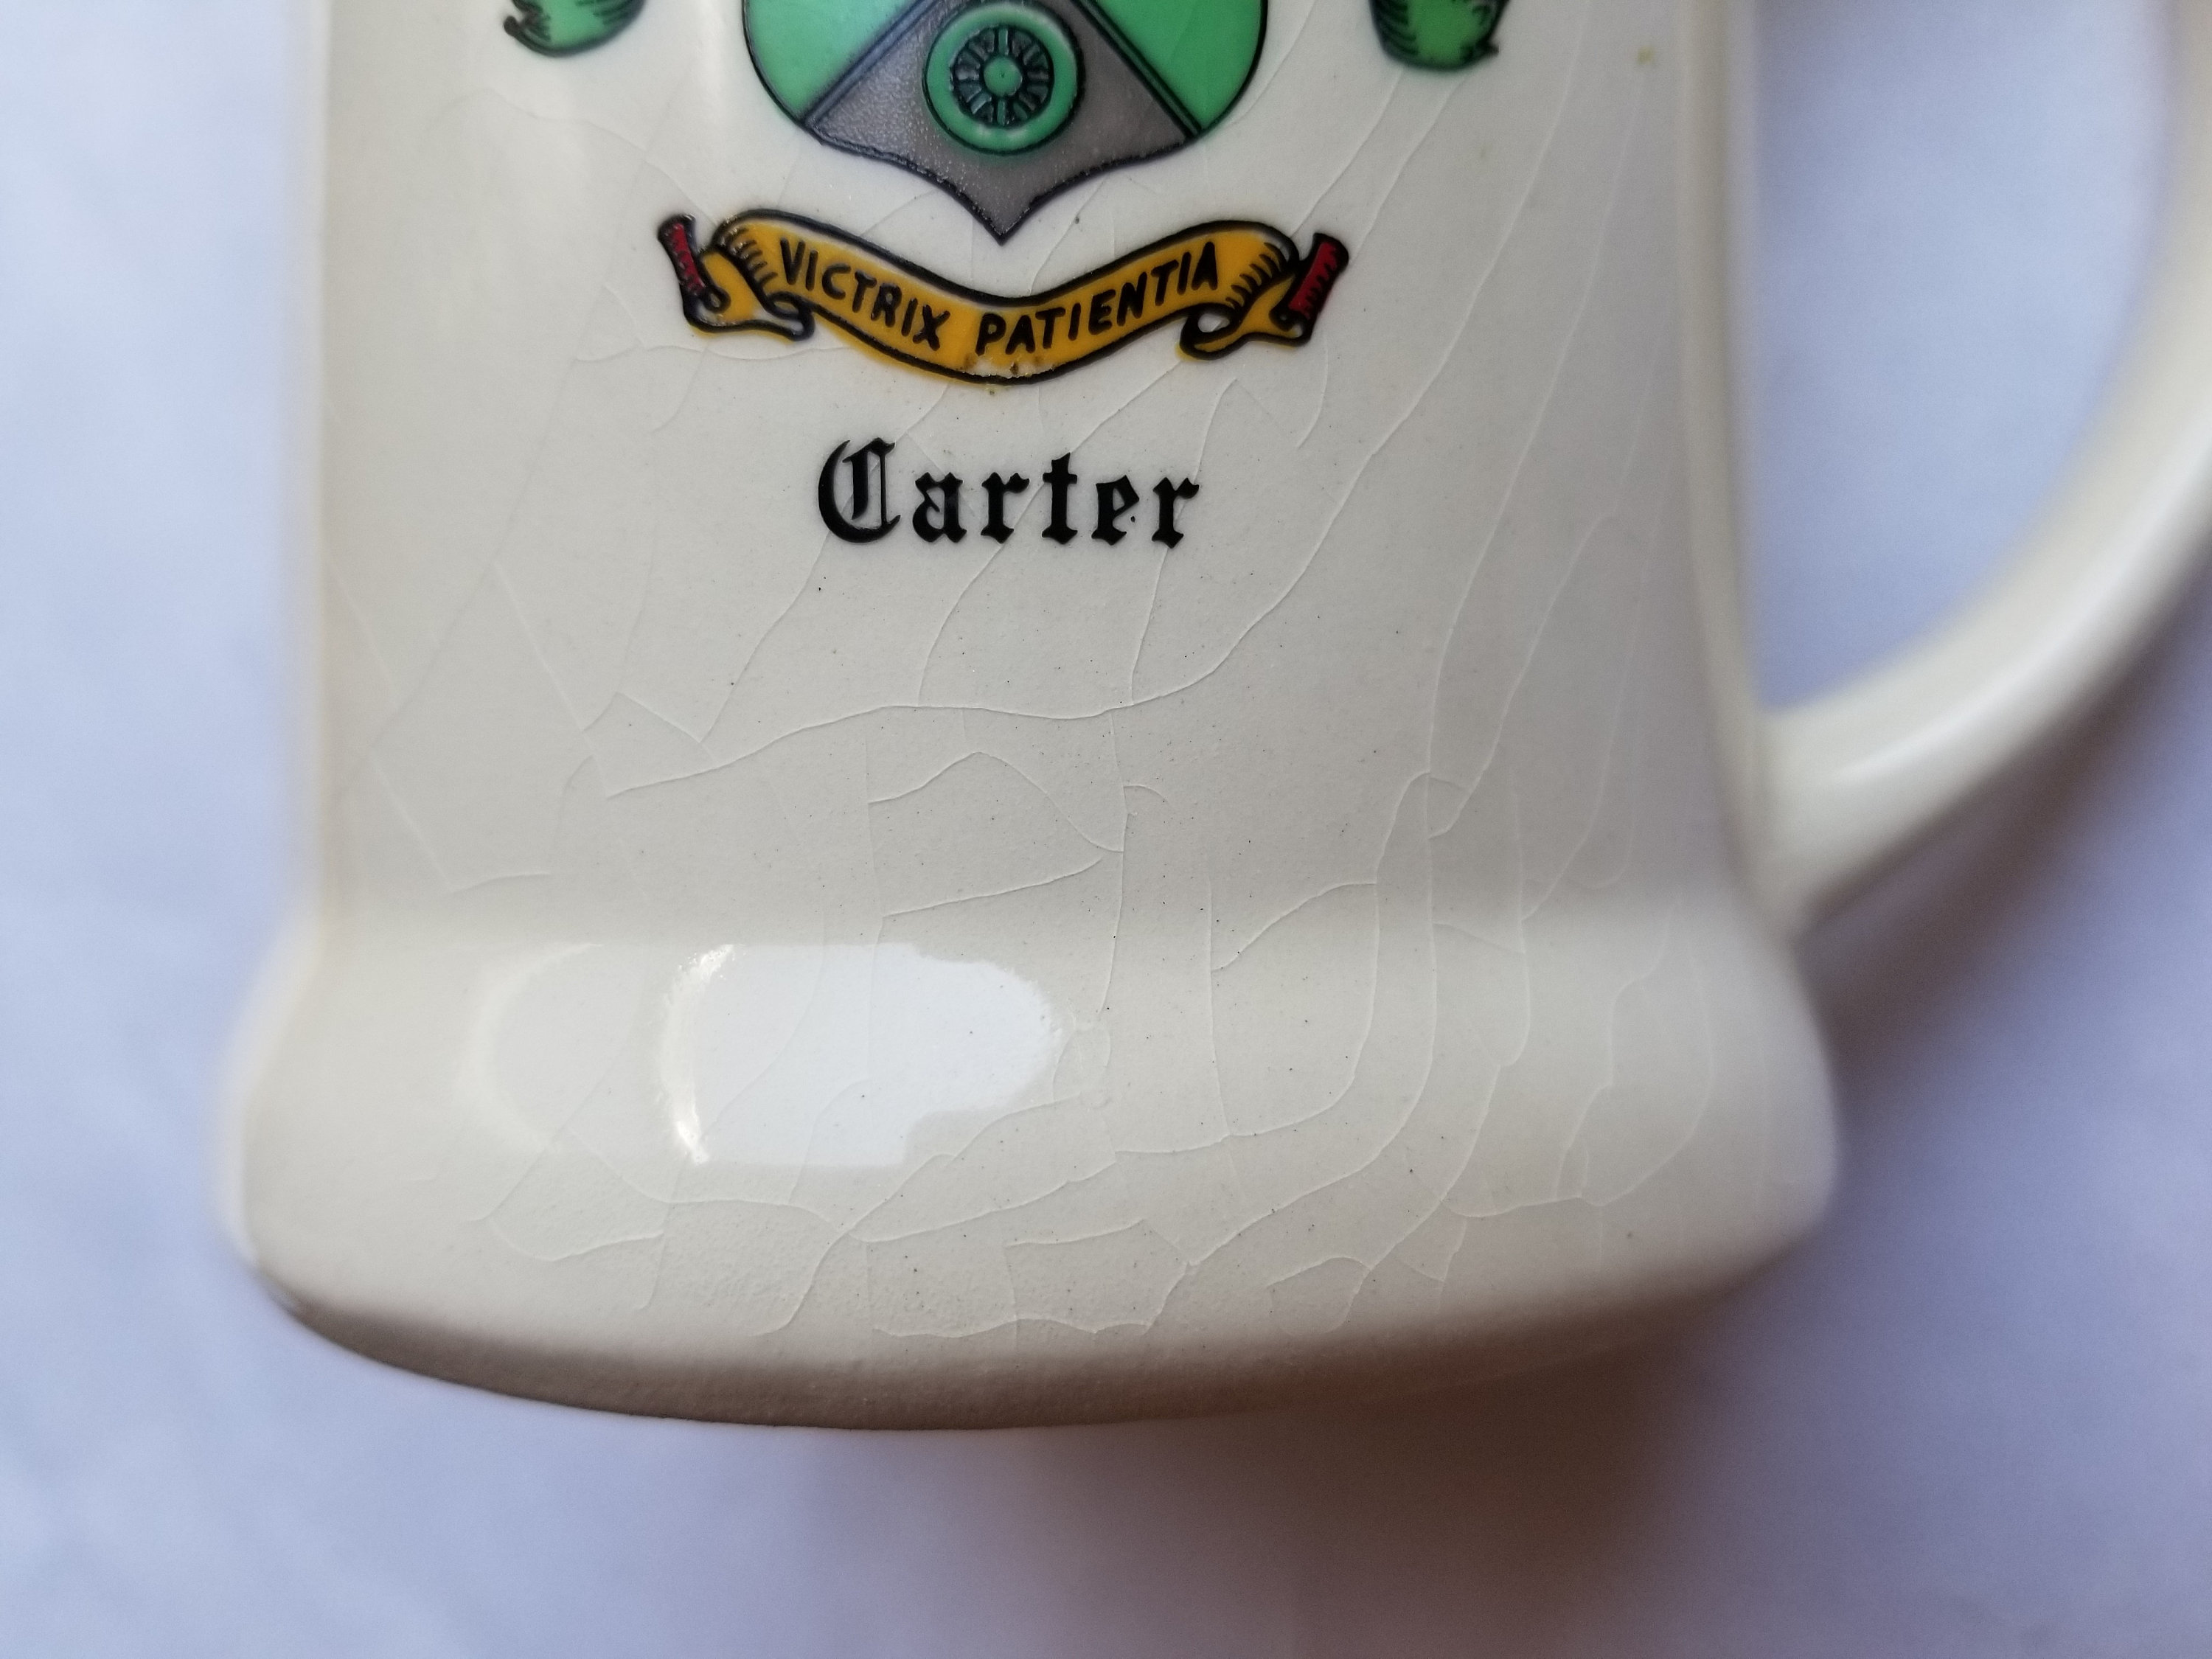 Vintage EUC Carter Irish Scottish English Family Coat of Arms